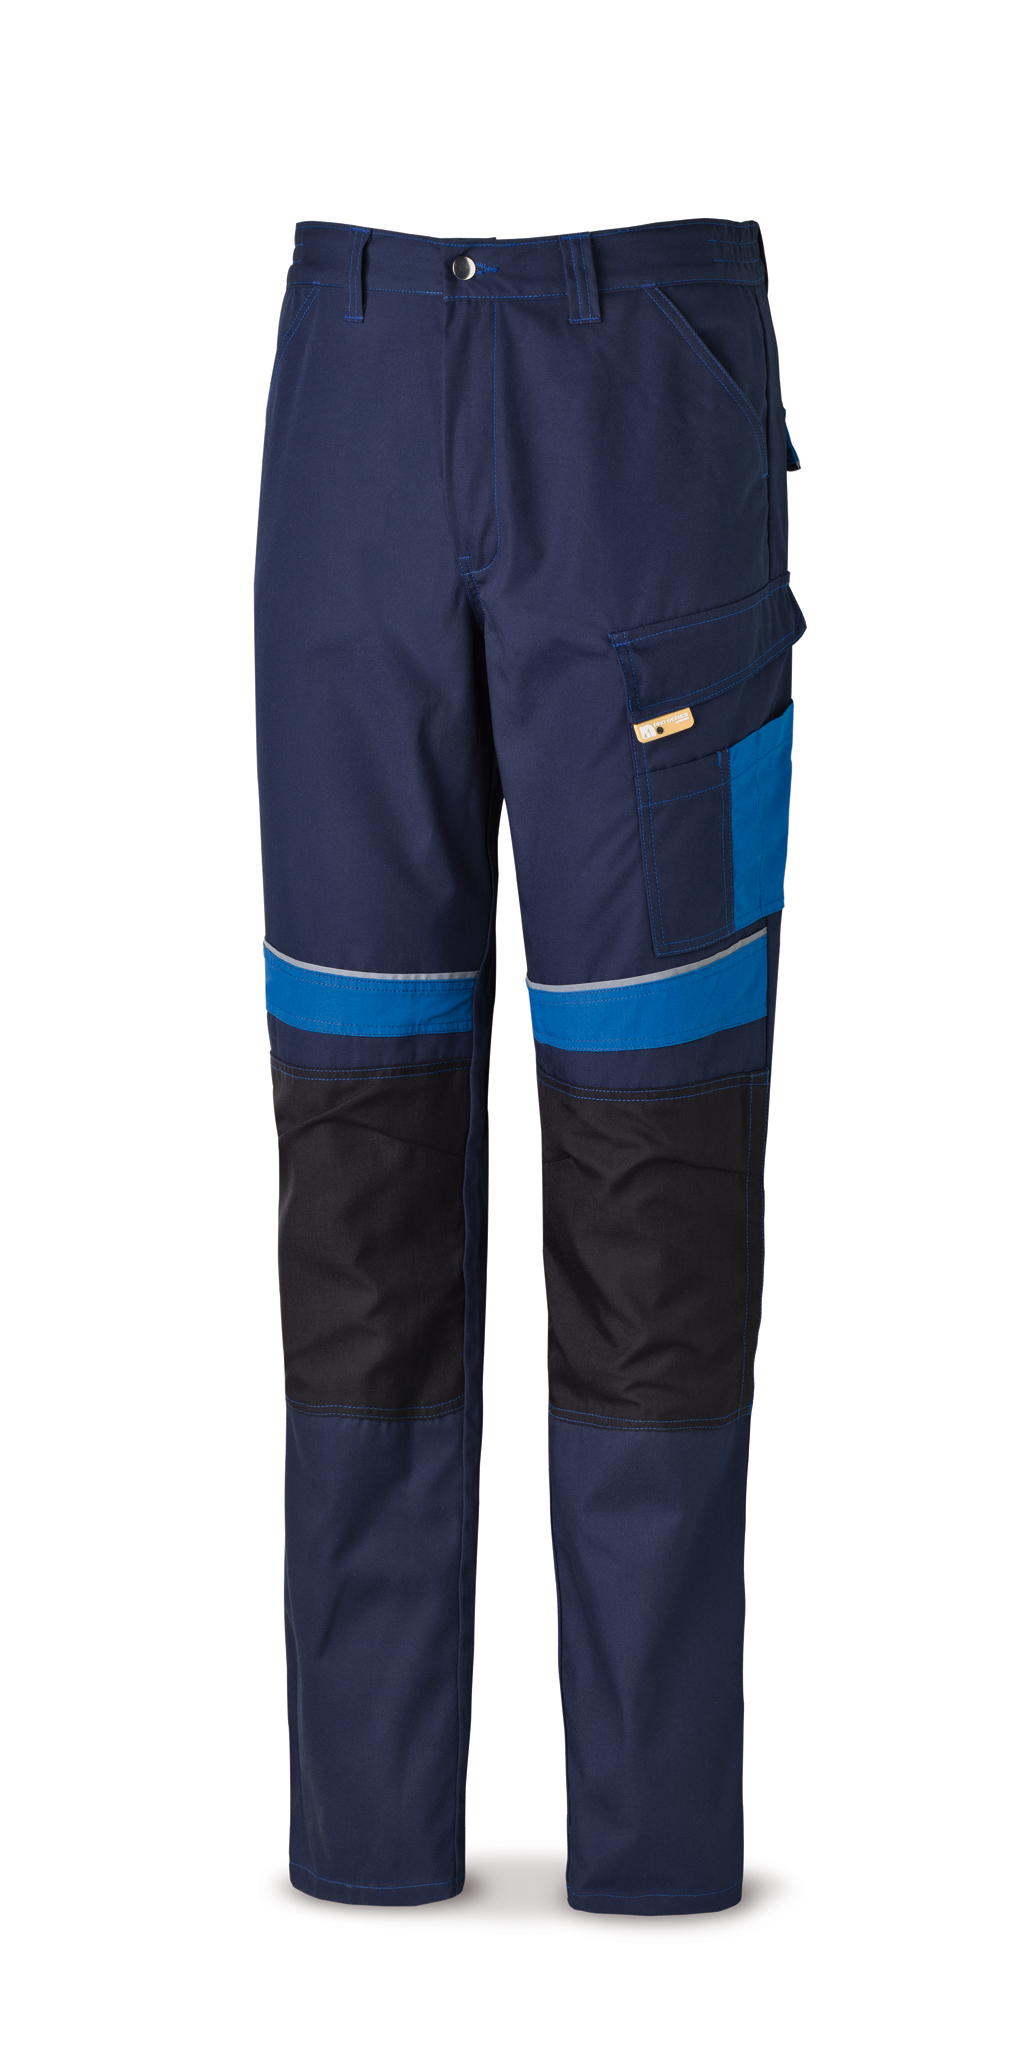 588-PAZA Vestuario Laboral Pro Series Pantalón CANVAS azul marino/azulina poliéster/algodón 245 g. Multibolsillos